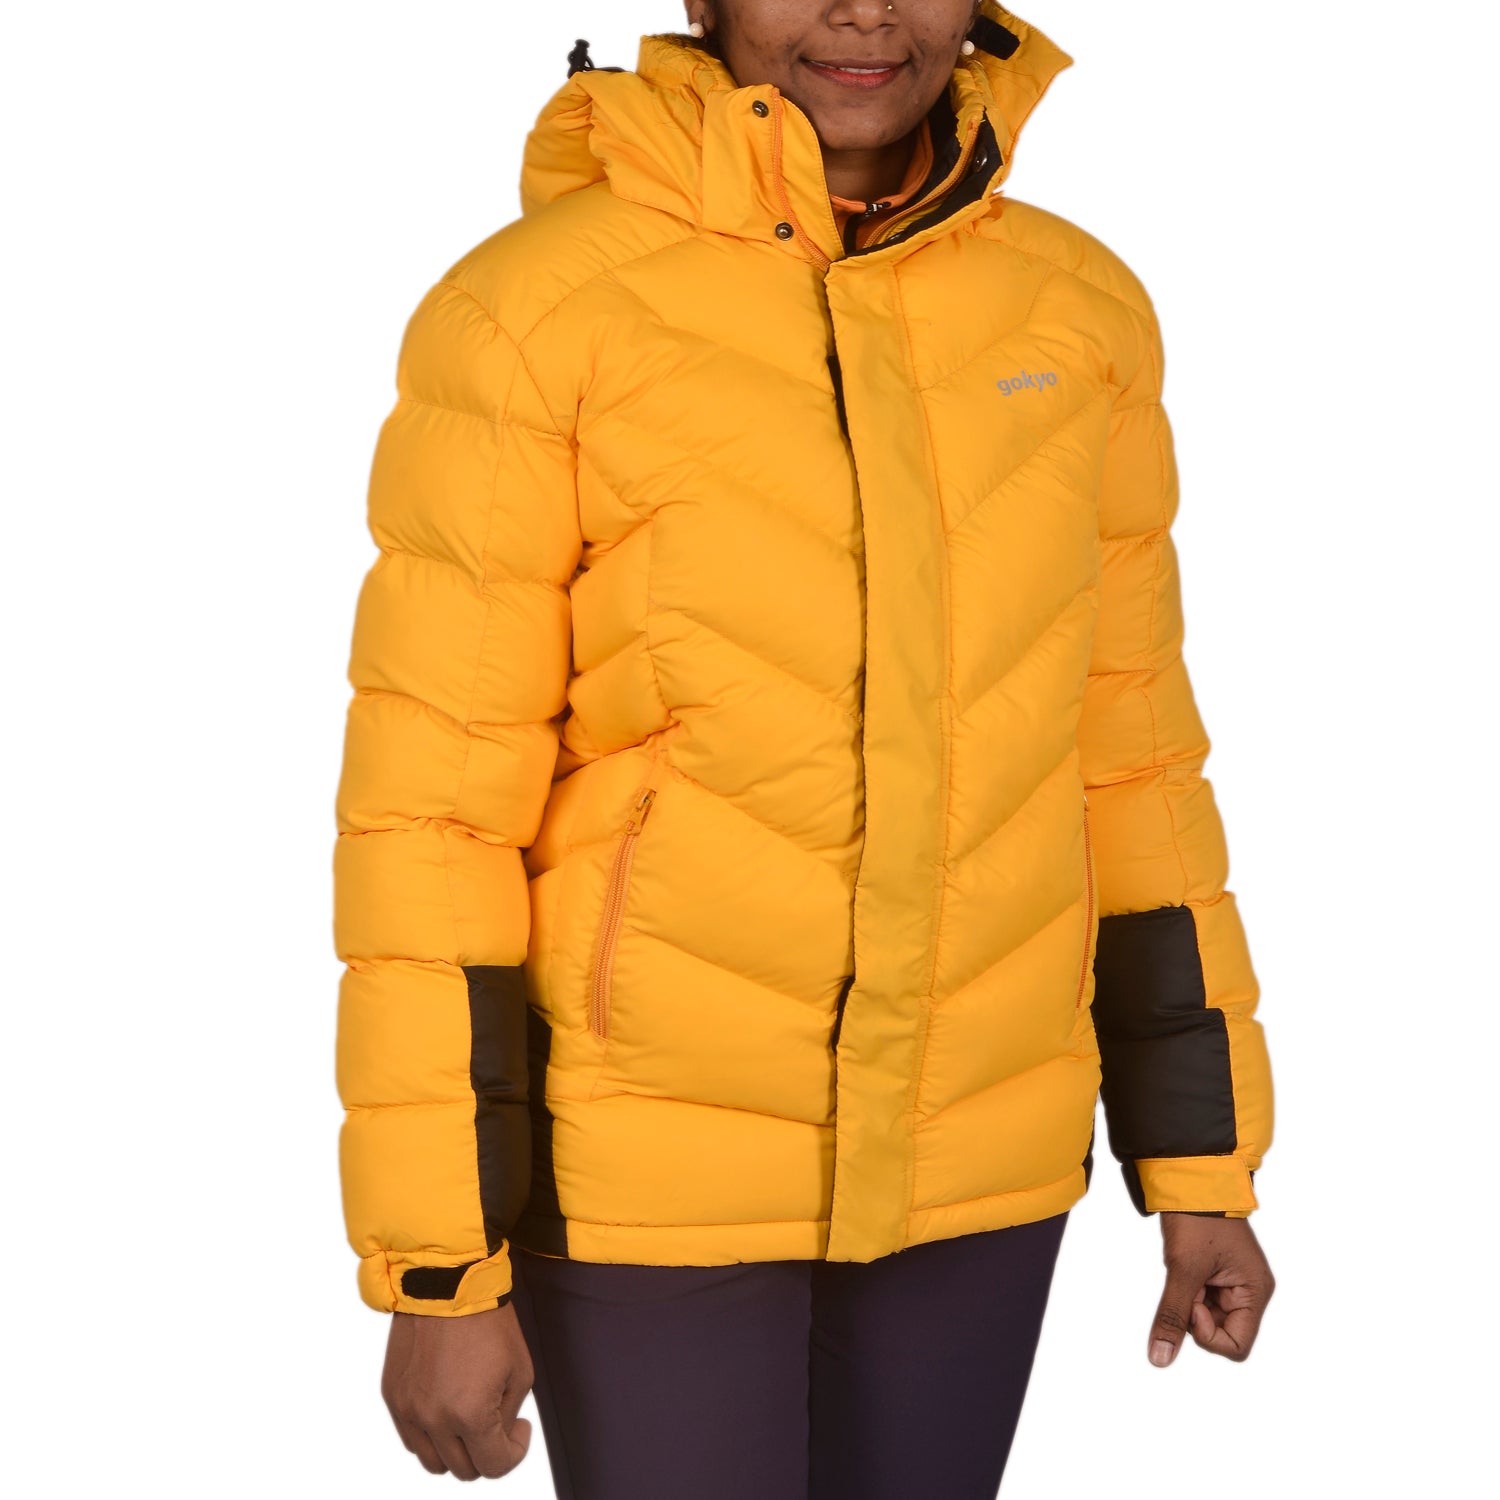 Buy Gokyo K2 Survivor Down Jacket - Women | Jackets at Gokyo Outdoor Clothing & Gear